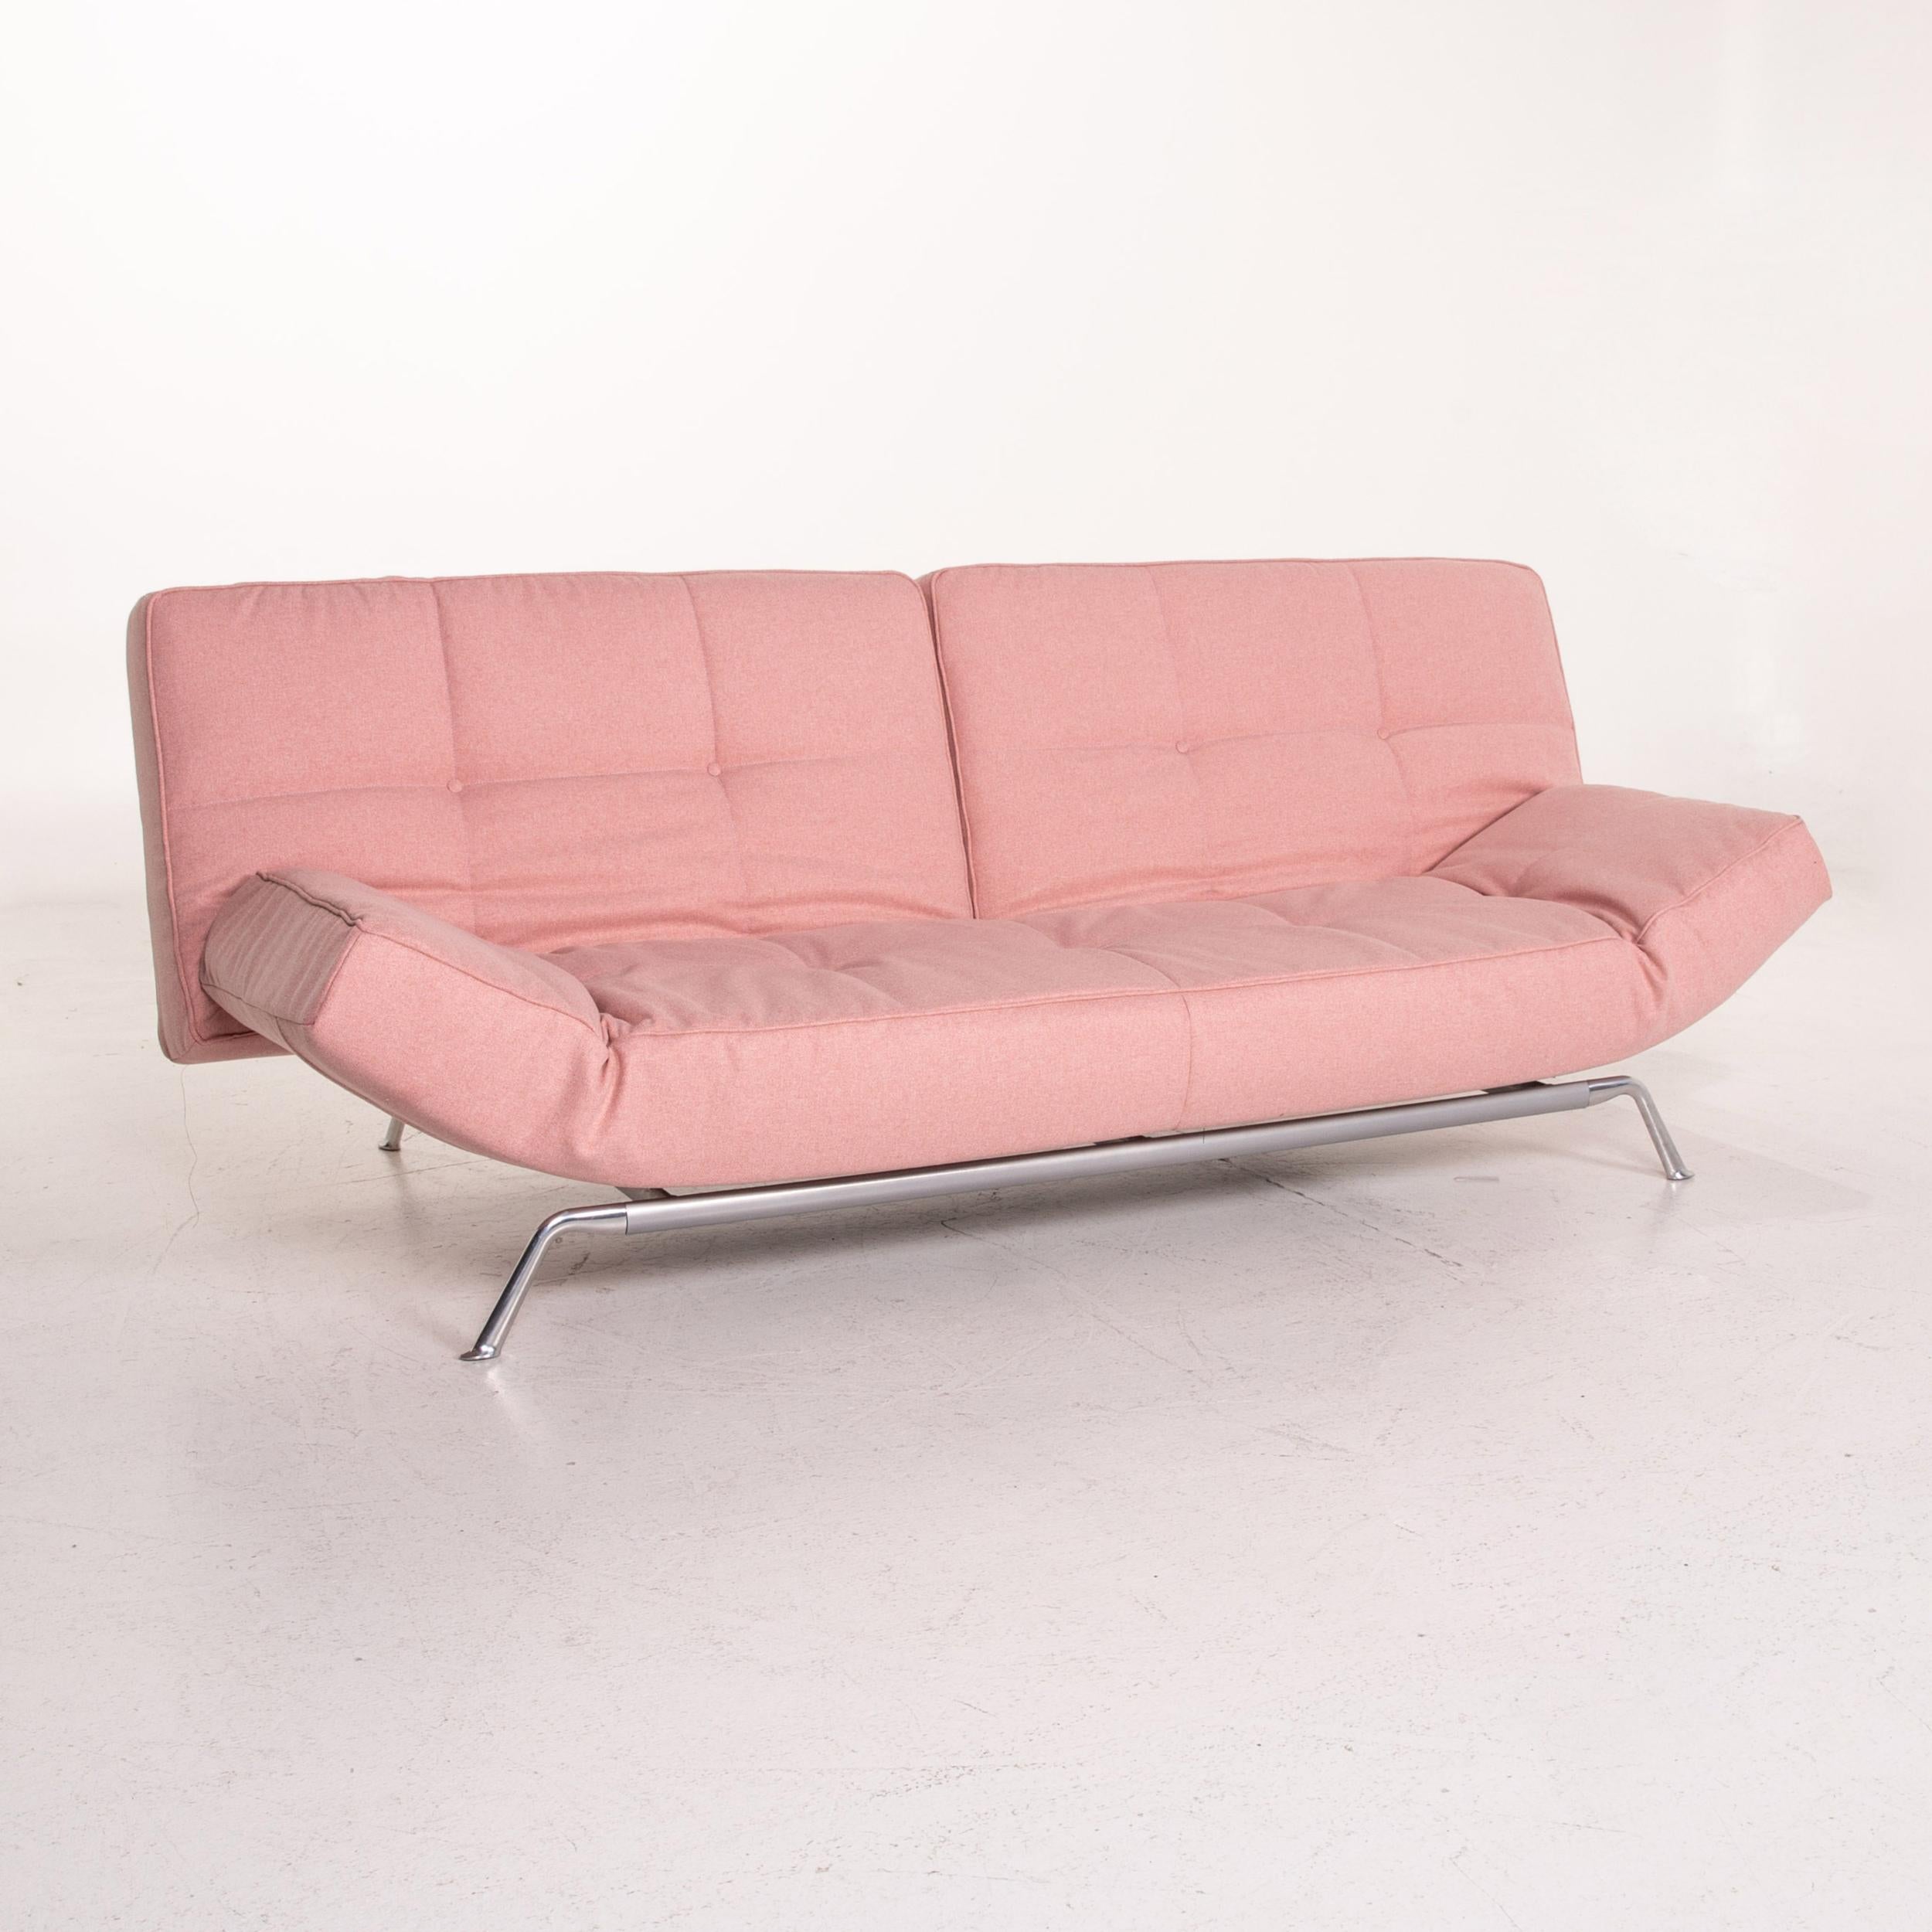 French Ligne Roset Smala Fabric Sofa Rosé Pink Three-Seat Function Sleeping Function